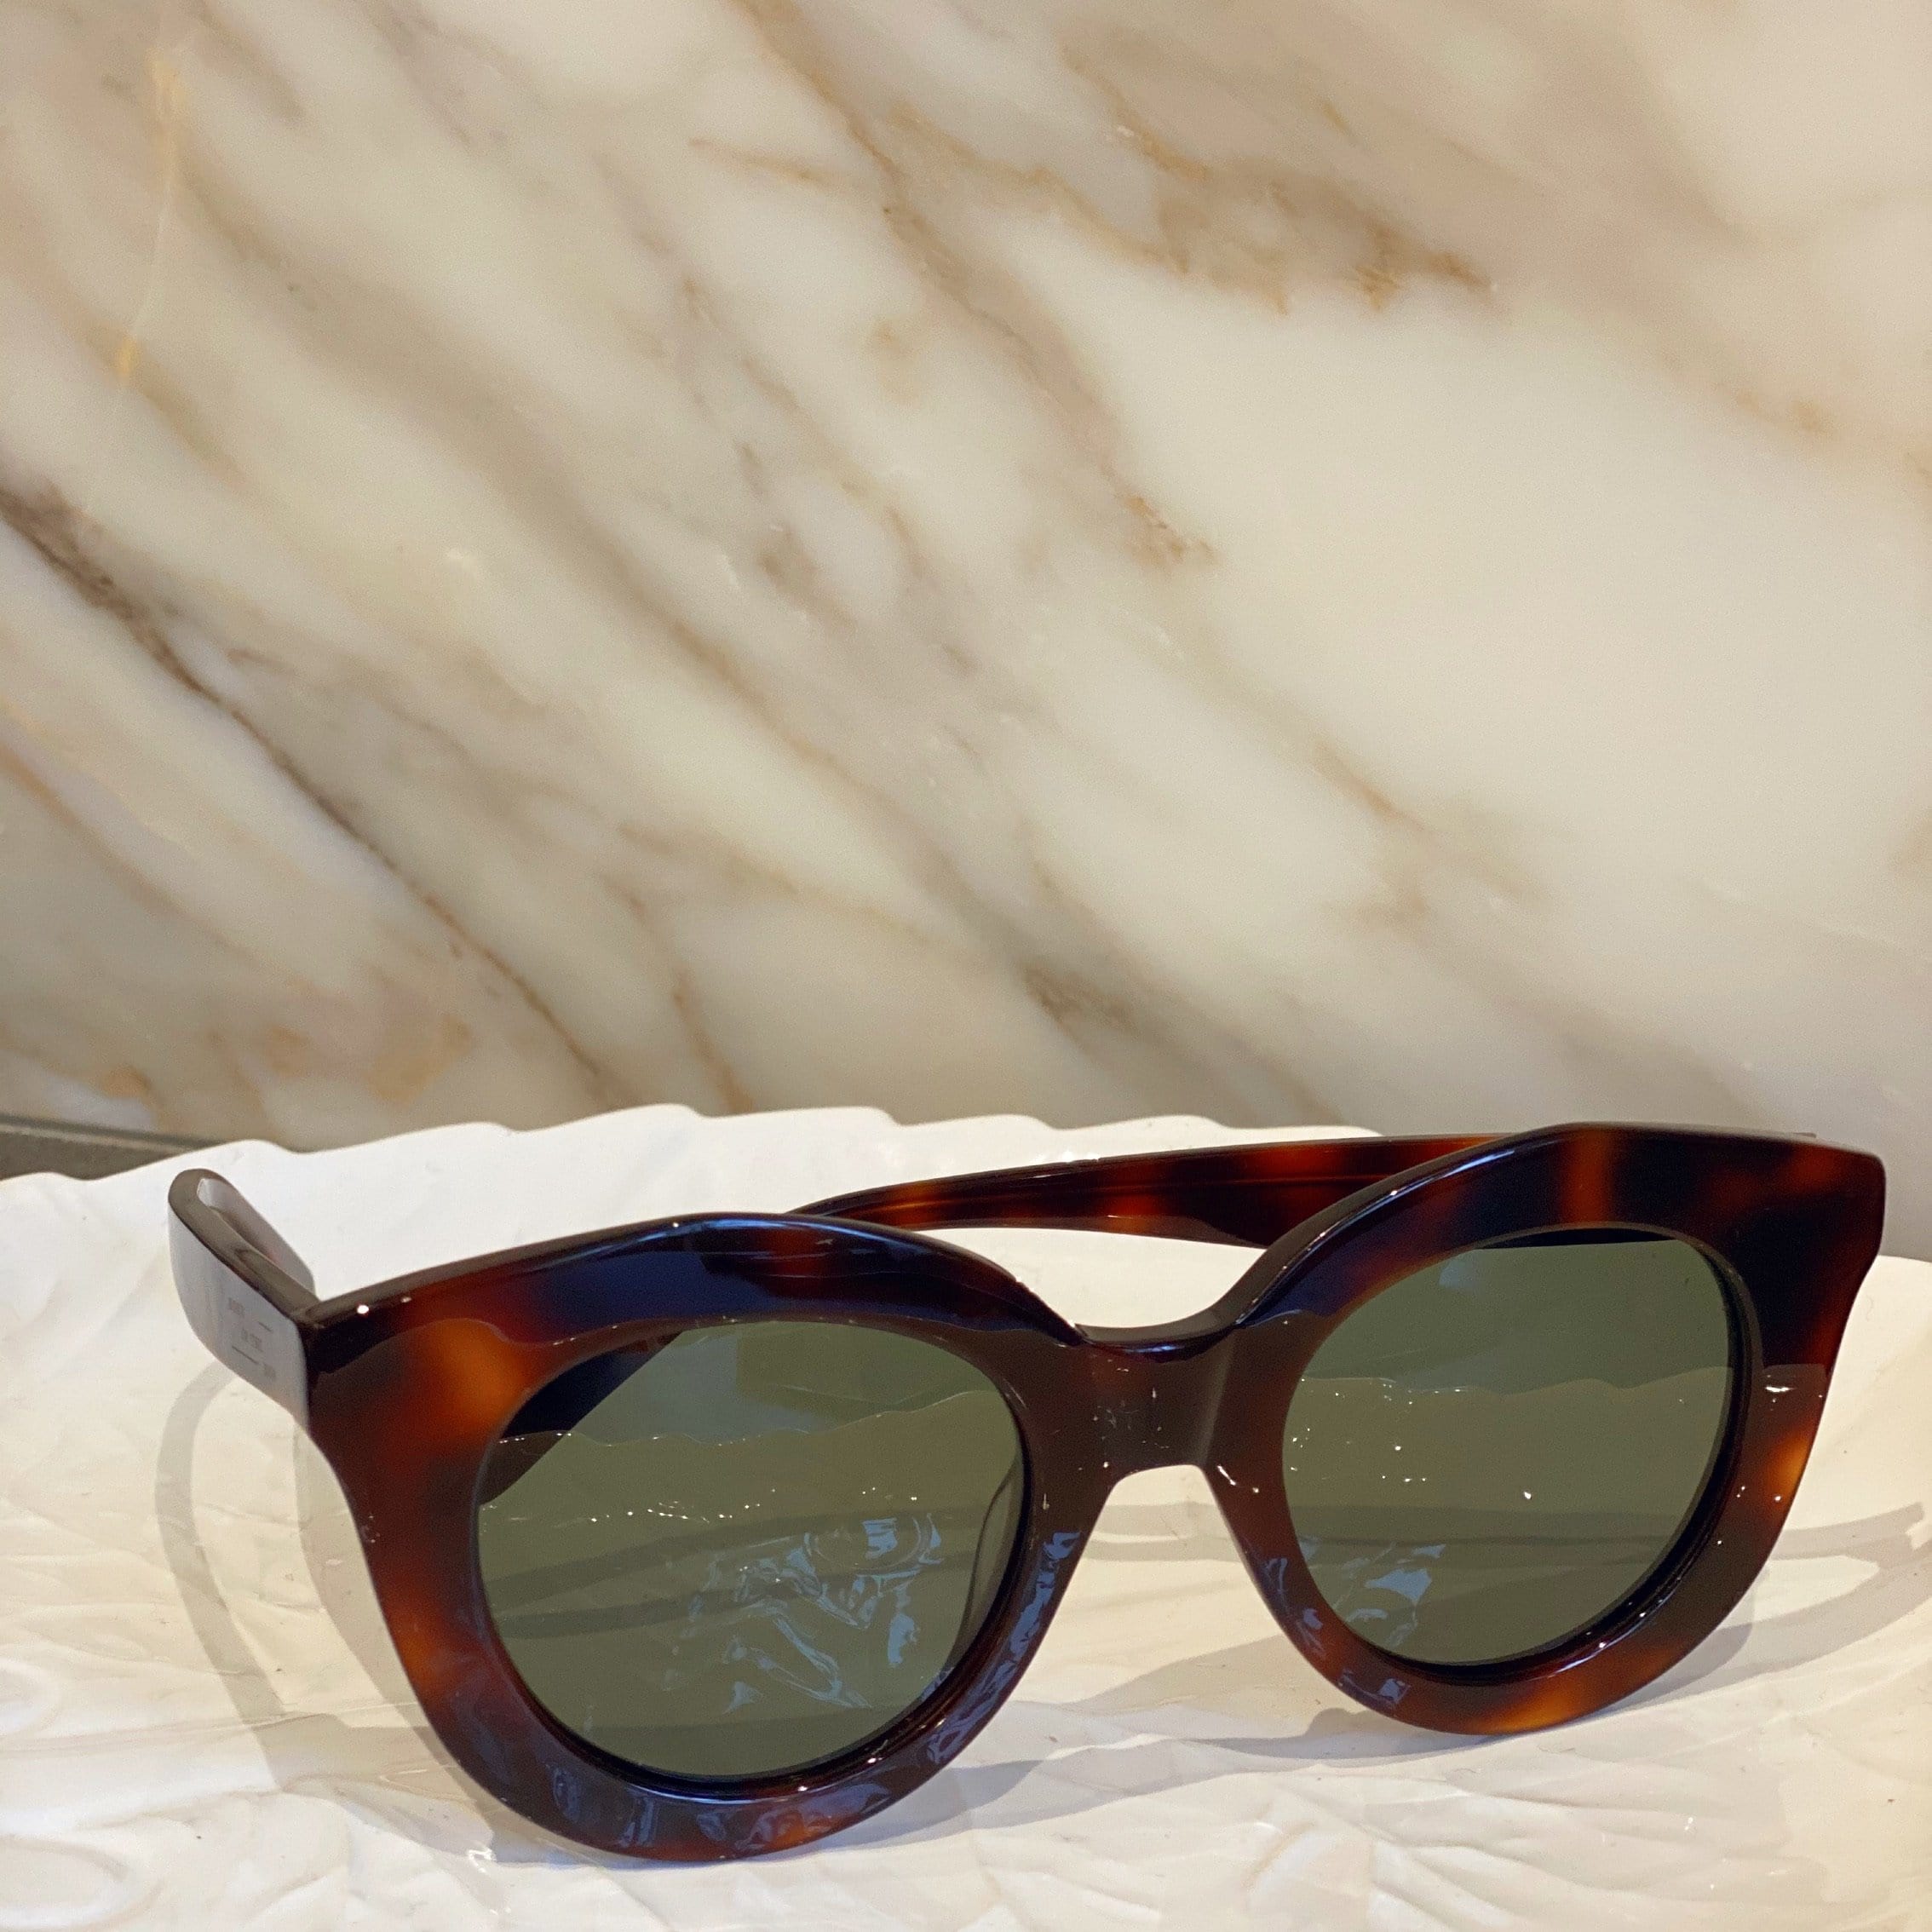 Lonny Style Tortoiseshell Brown Sunglasses at Born In The Sun - Borninthesun